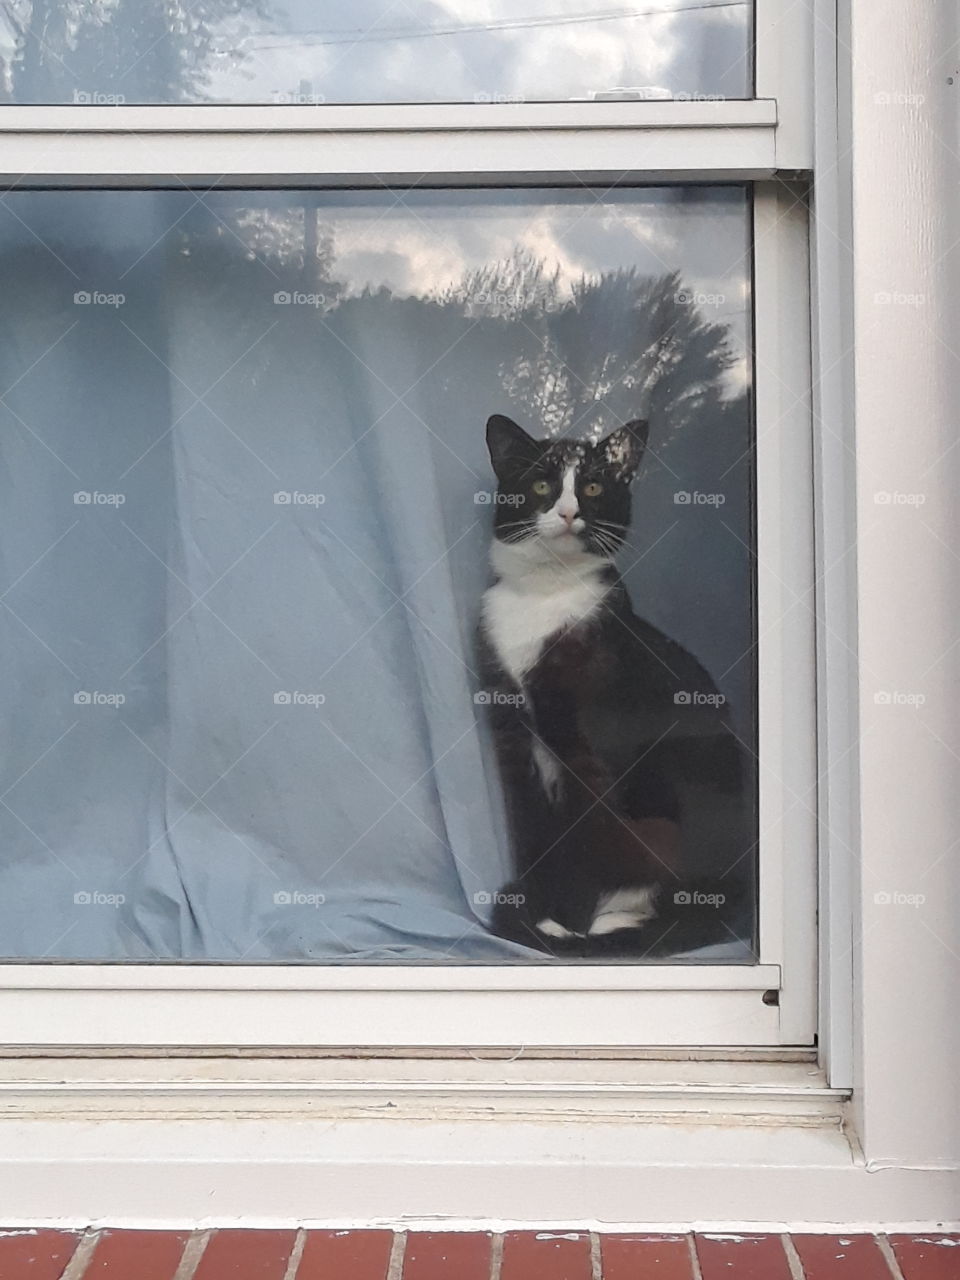 inquisitive cat in the window